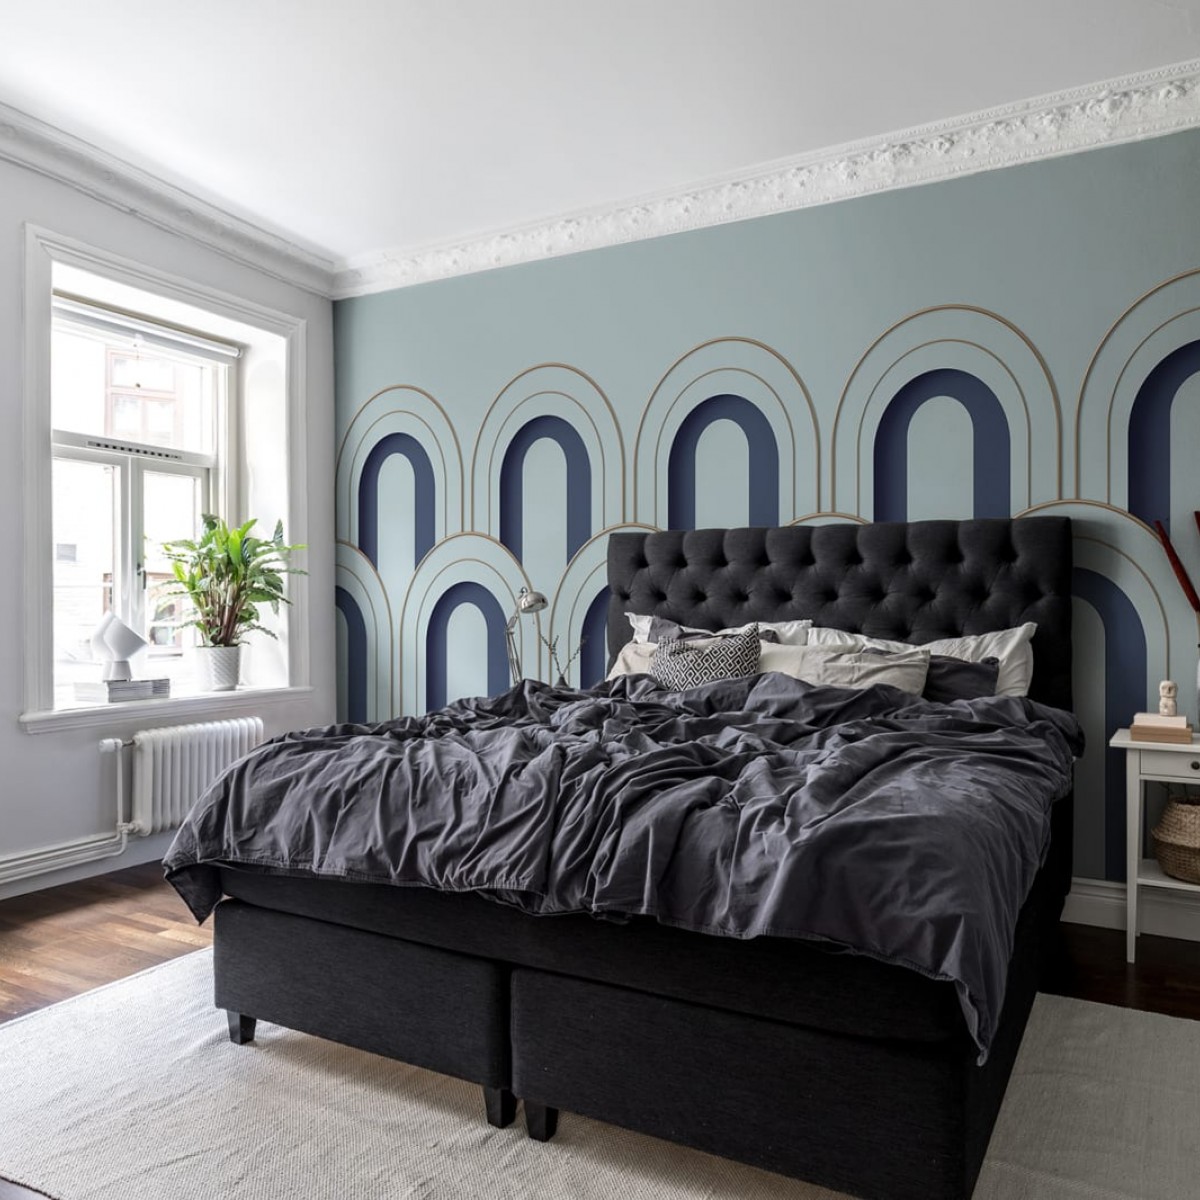 Fototapet 3D Arch Deco, Blue, personalizat, Rebel Walls, Fototapet living 